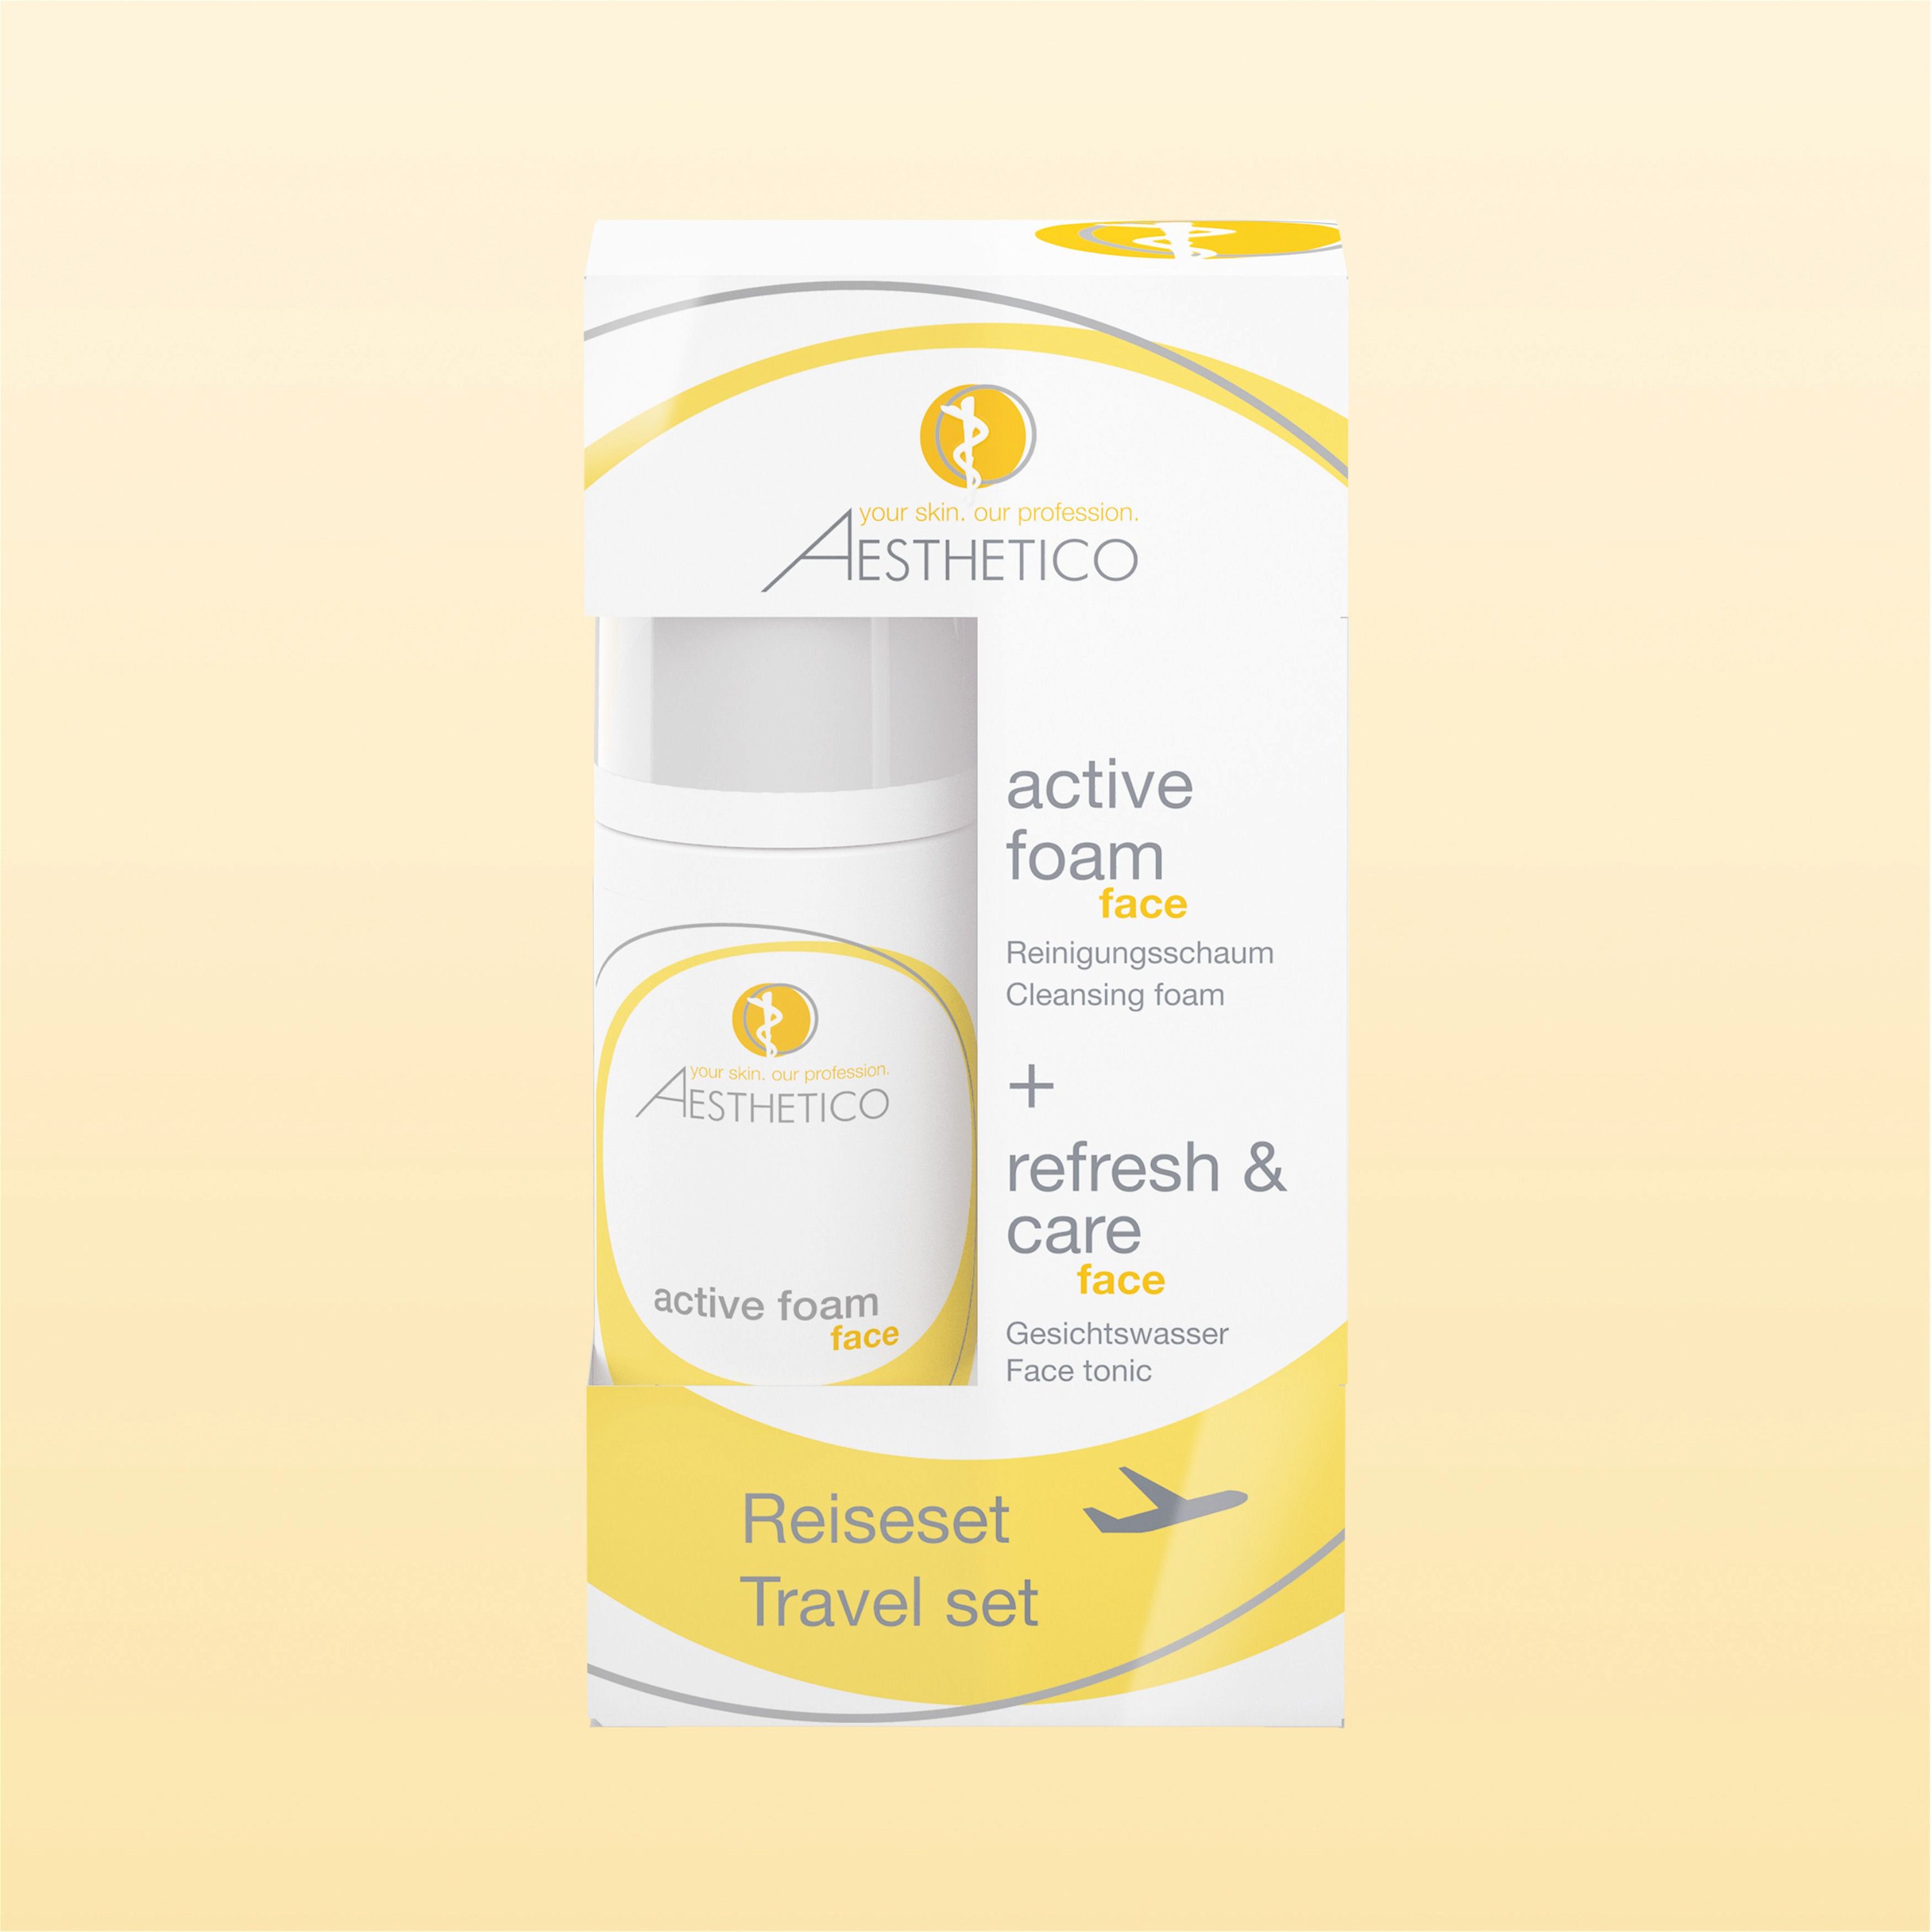 Umverpackung AESTHETICO Reiseset refresh & care + active foam, 2x 50 ml